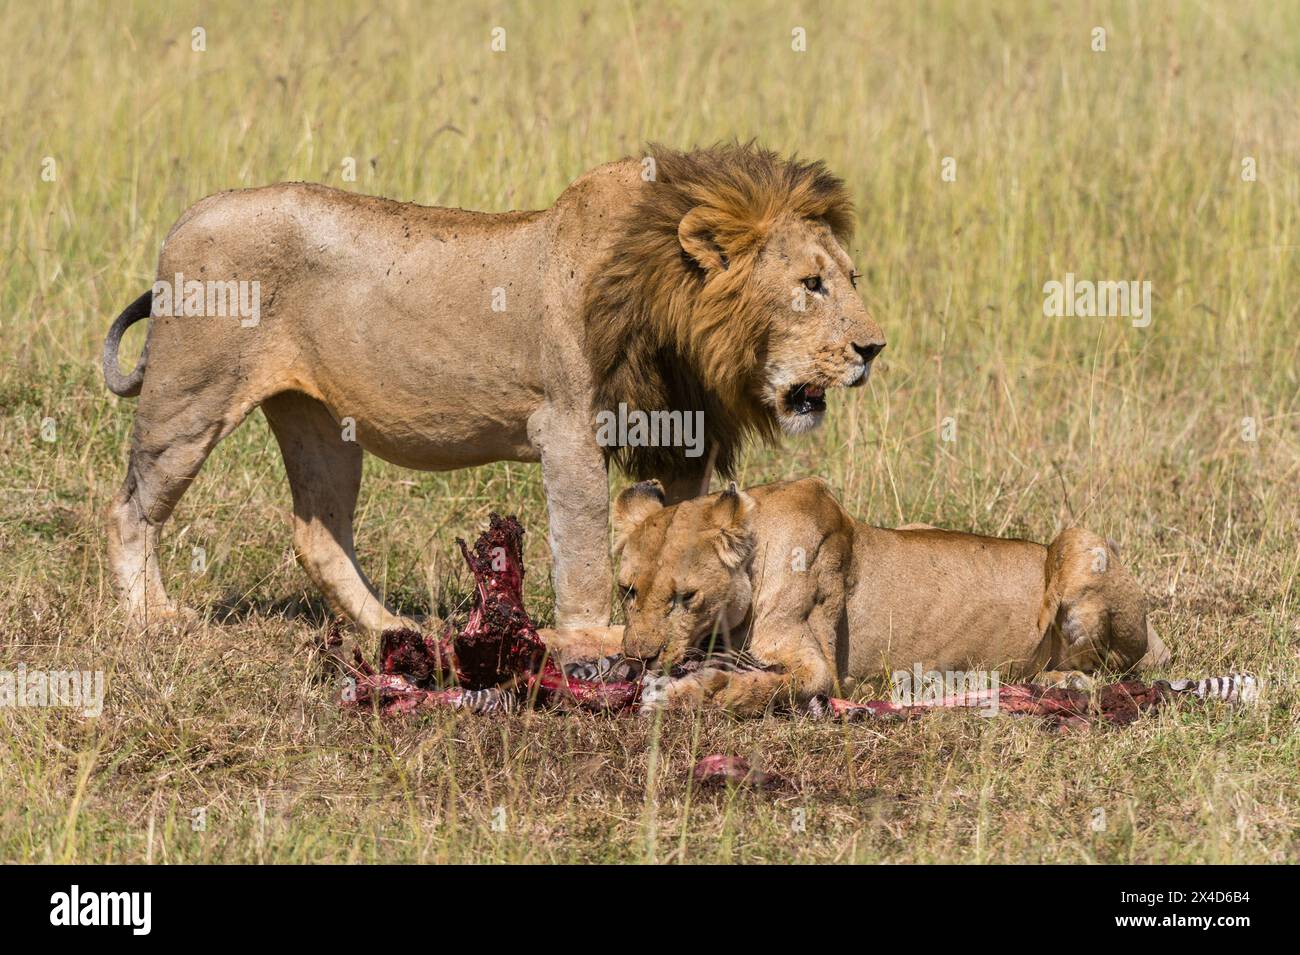 Lions, Panthera leo, feeding on a zebra. Masai Mara National Reserve, Kenya, Africa. Stock Photo